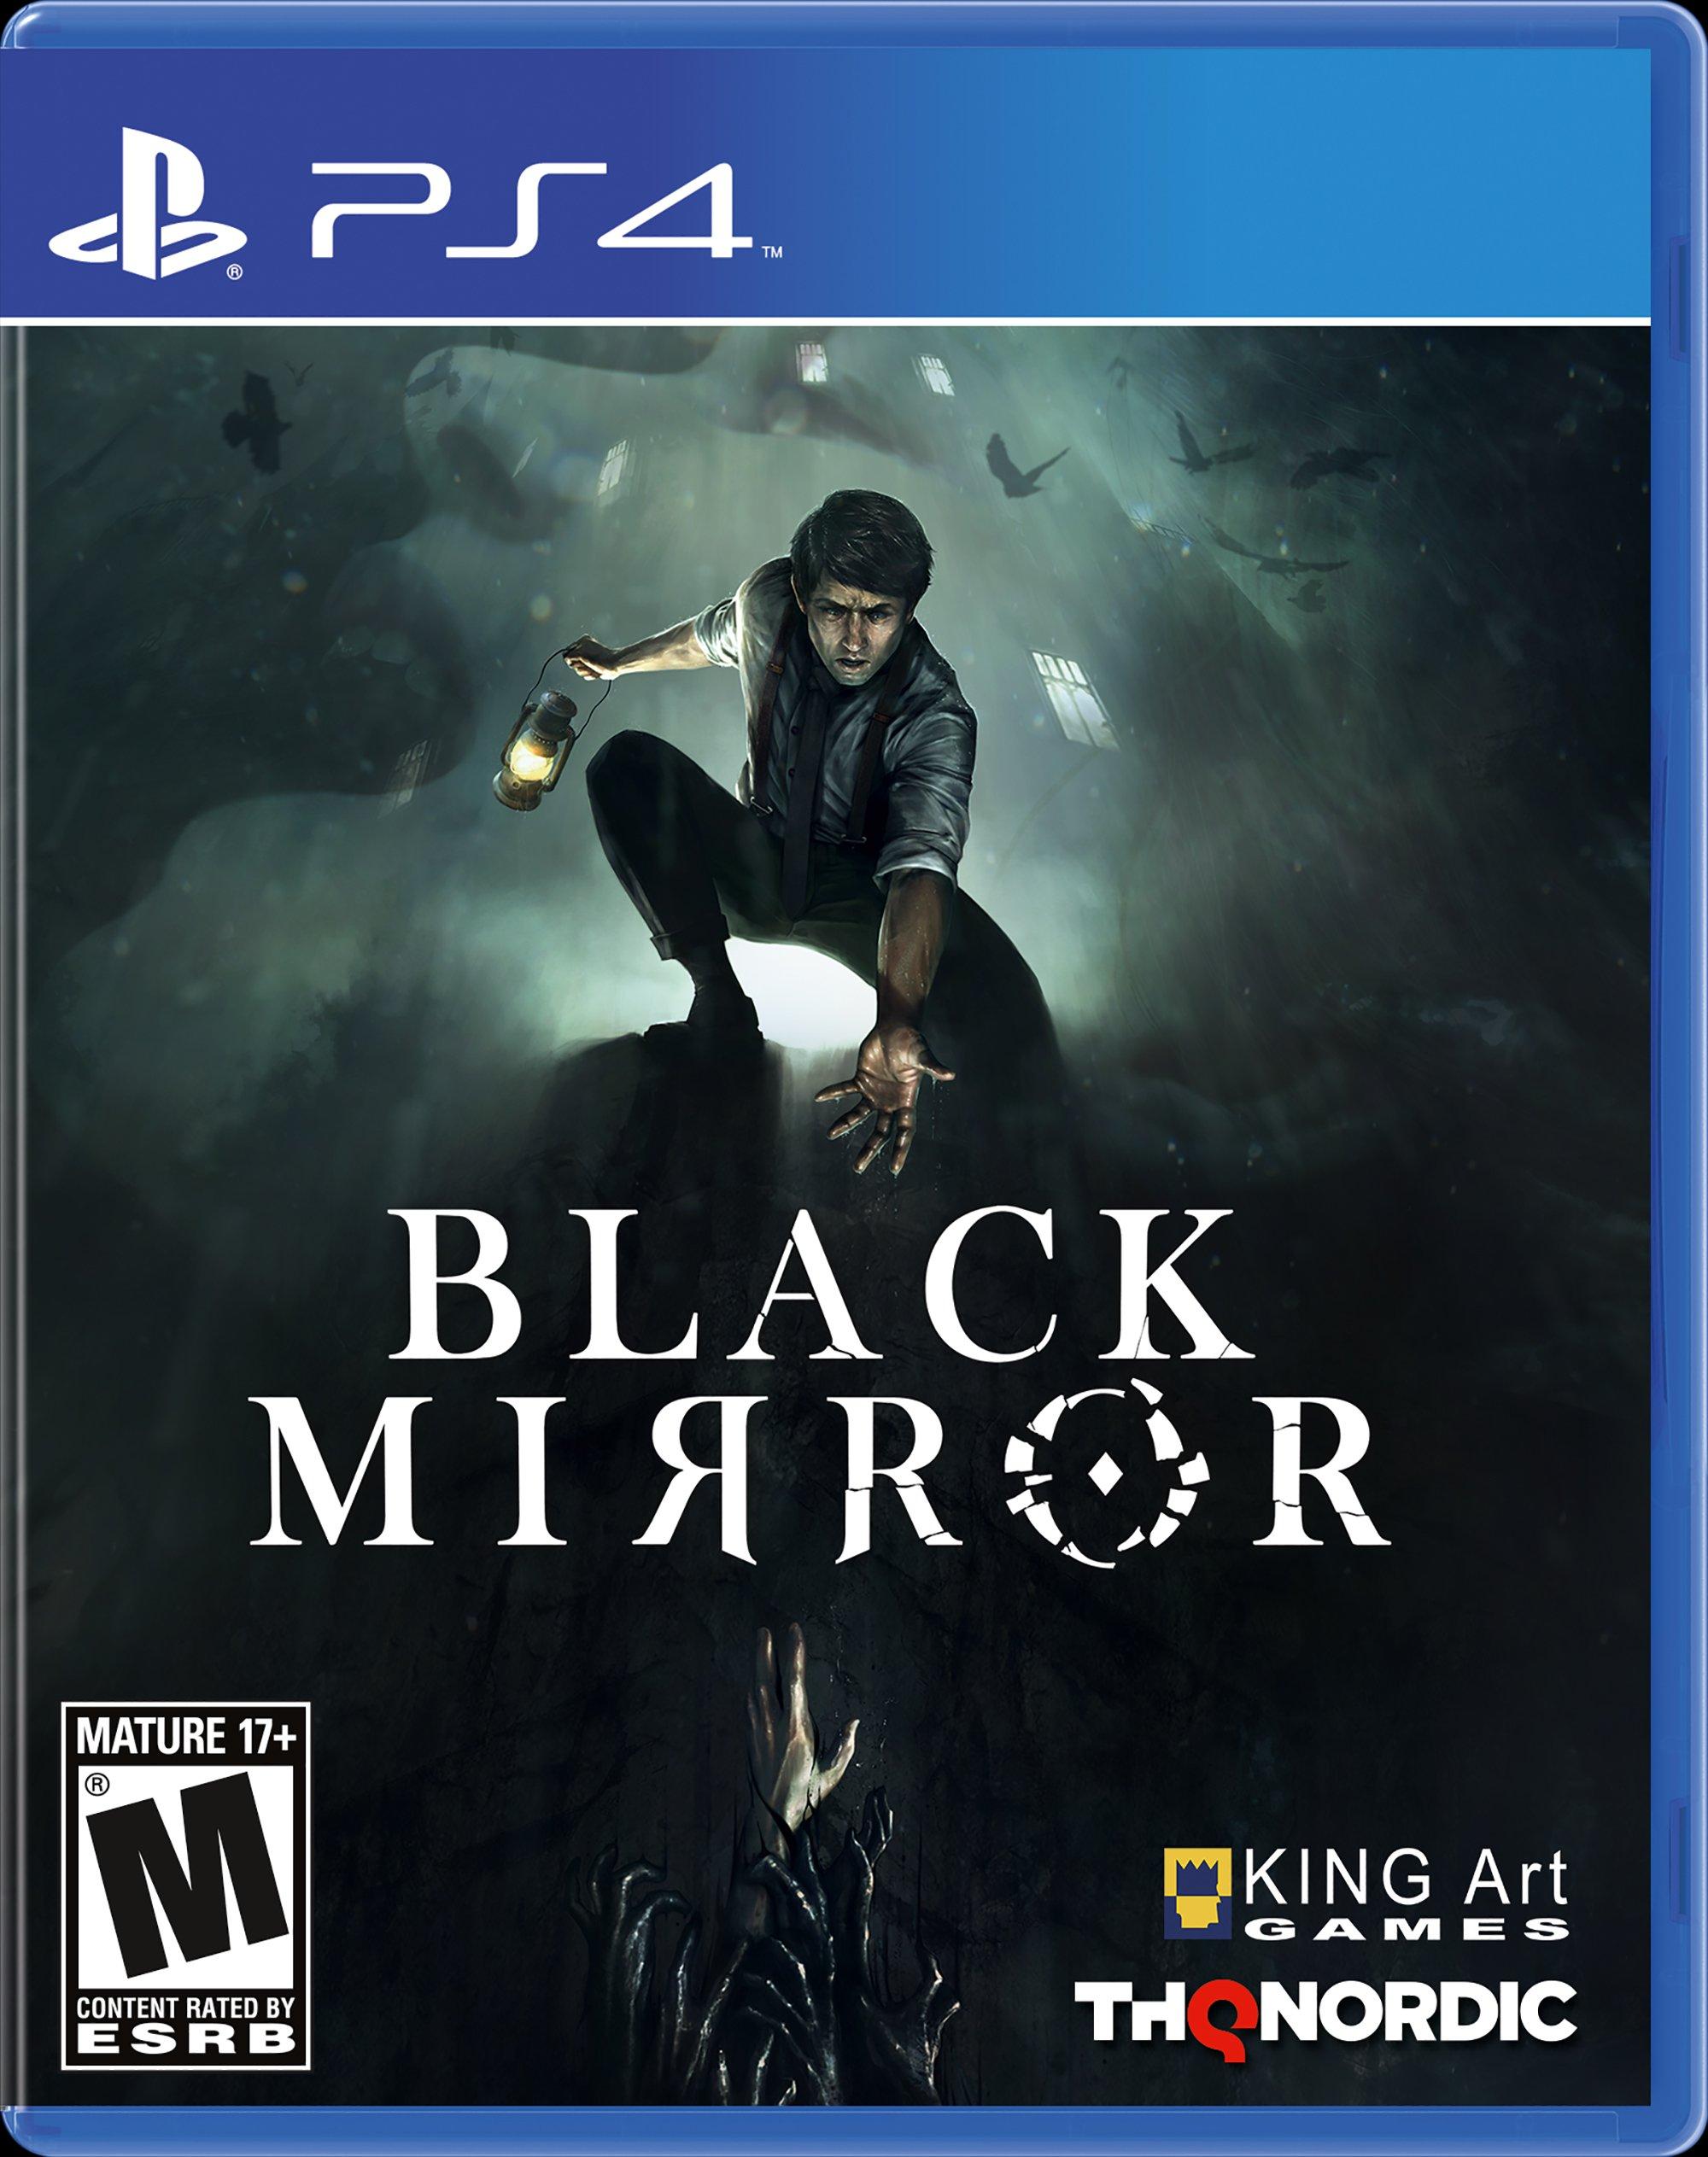 Black Mirror - PlayStation 4